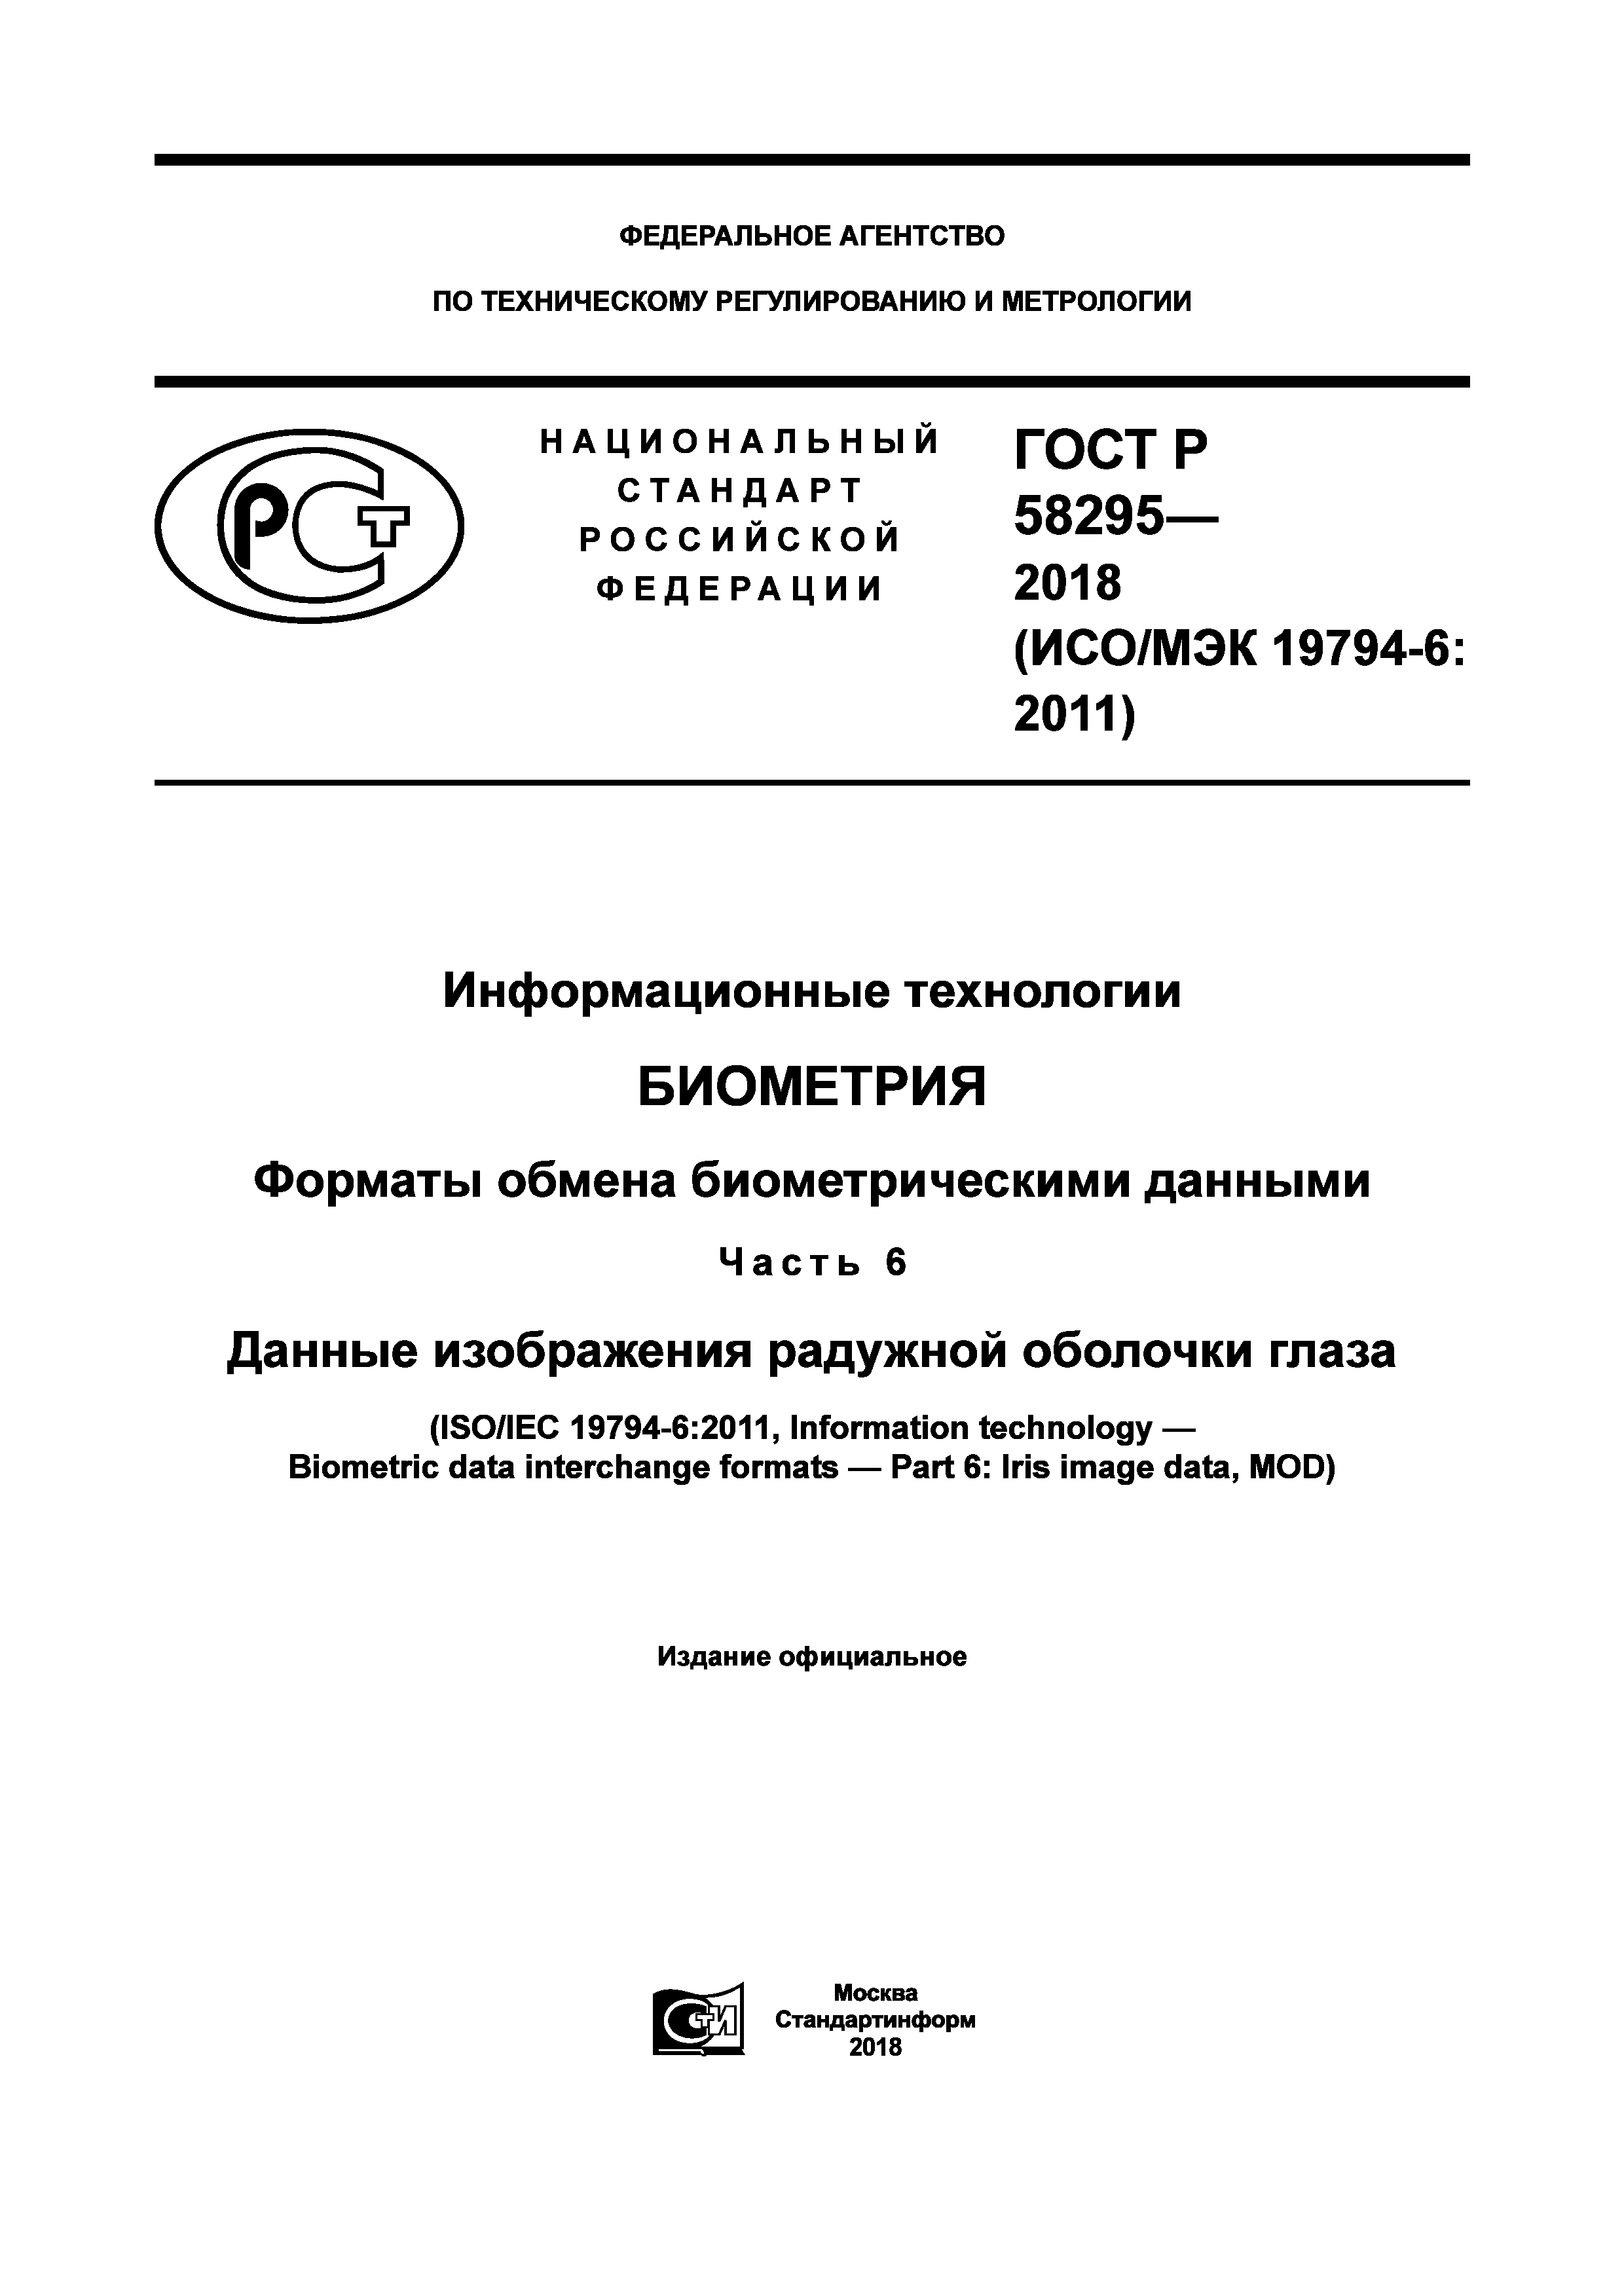 ГОСТ Р 58295-2018